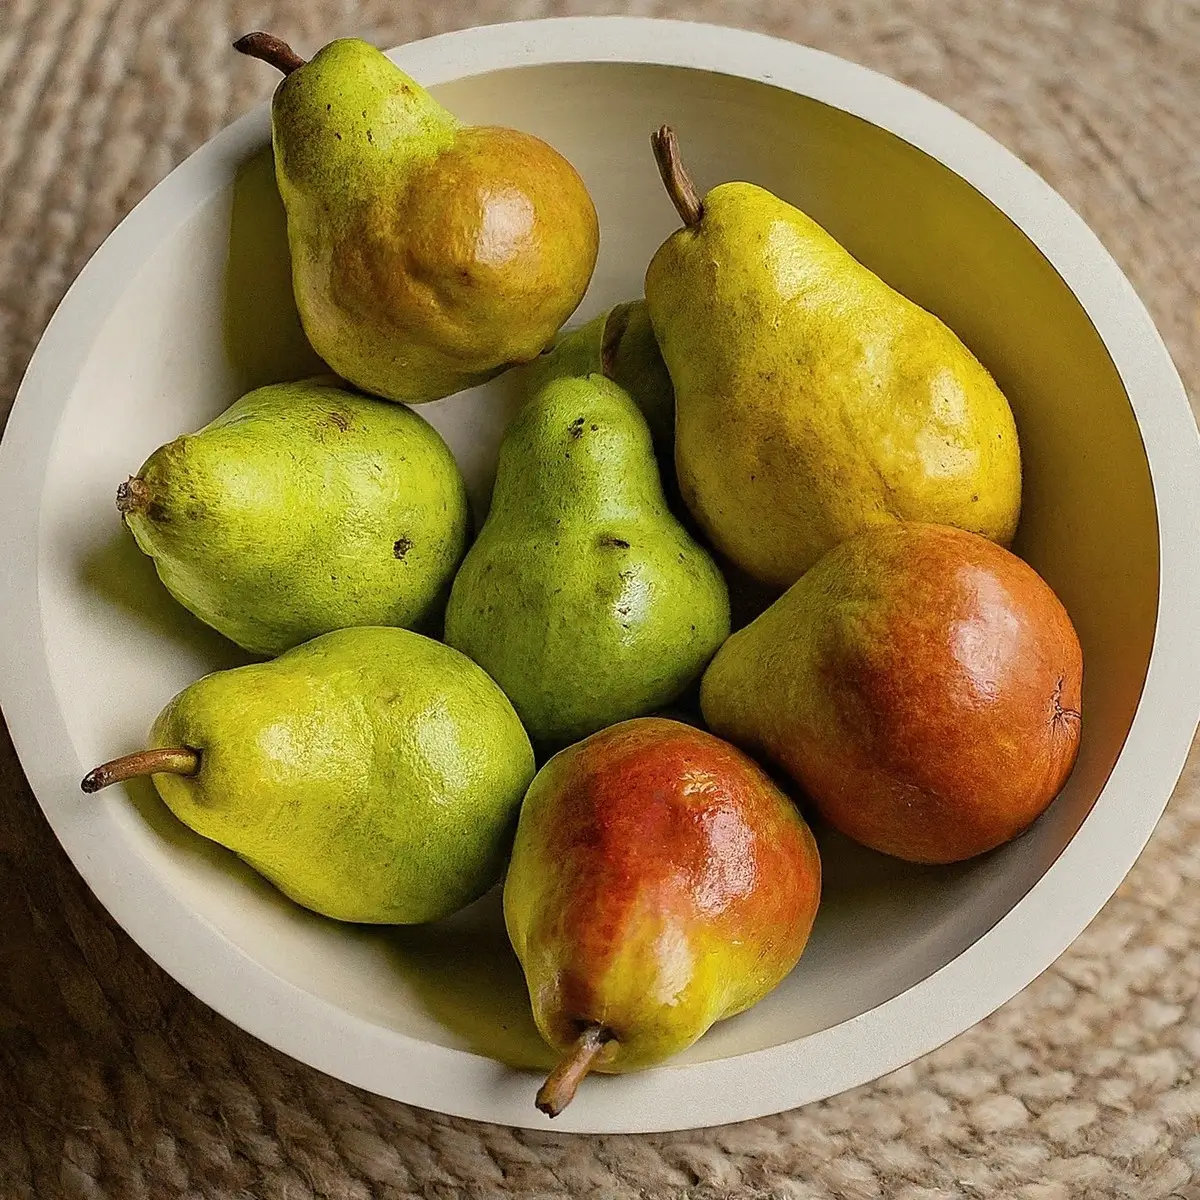 Selecting ripe pears